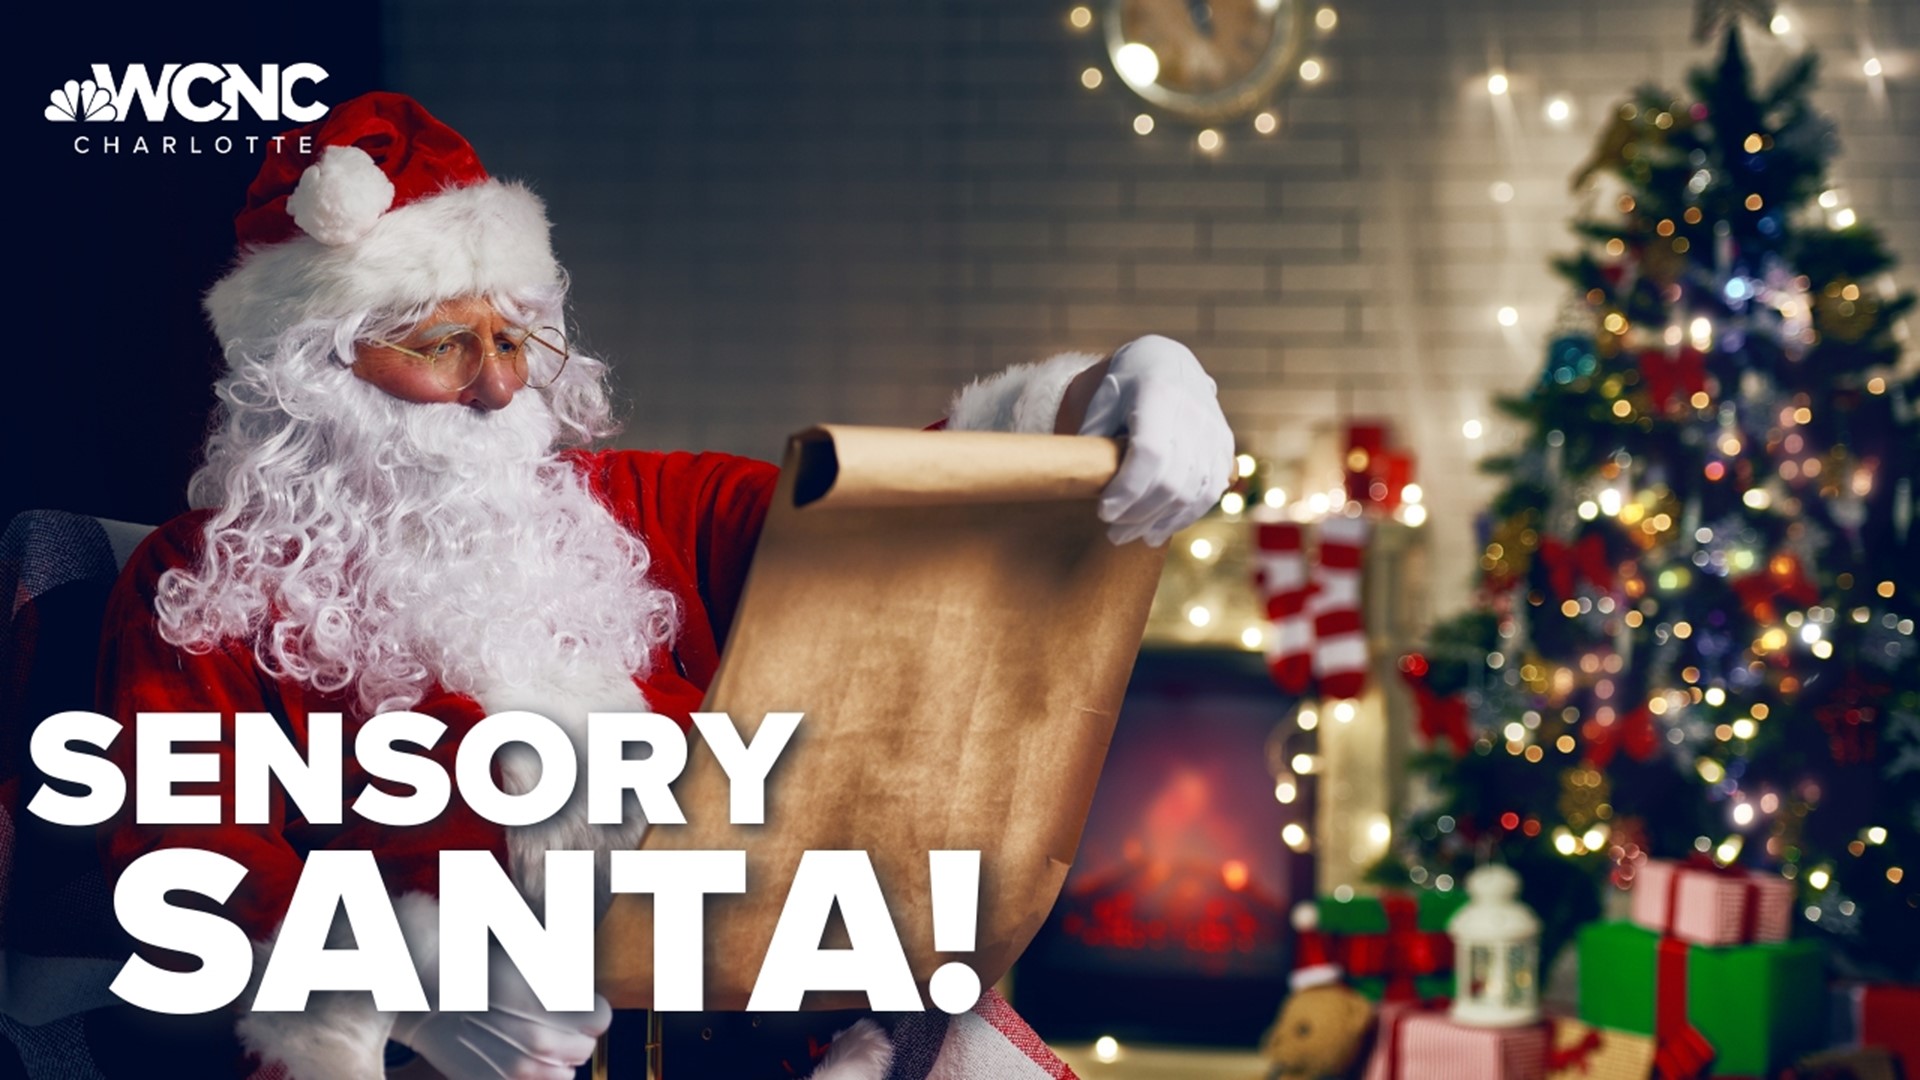 Sensory Santa is coming to both Northlake and Southpark mall this Sunday!